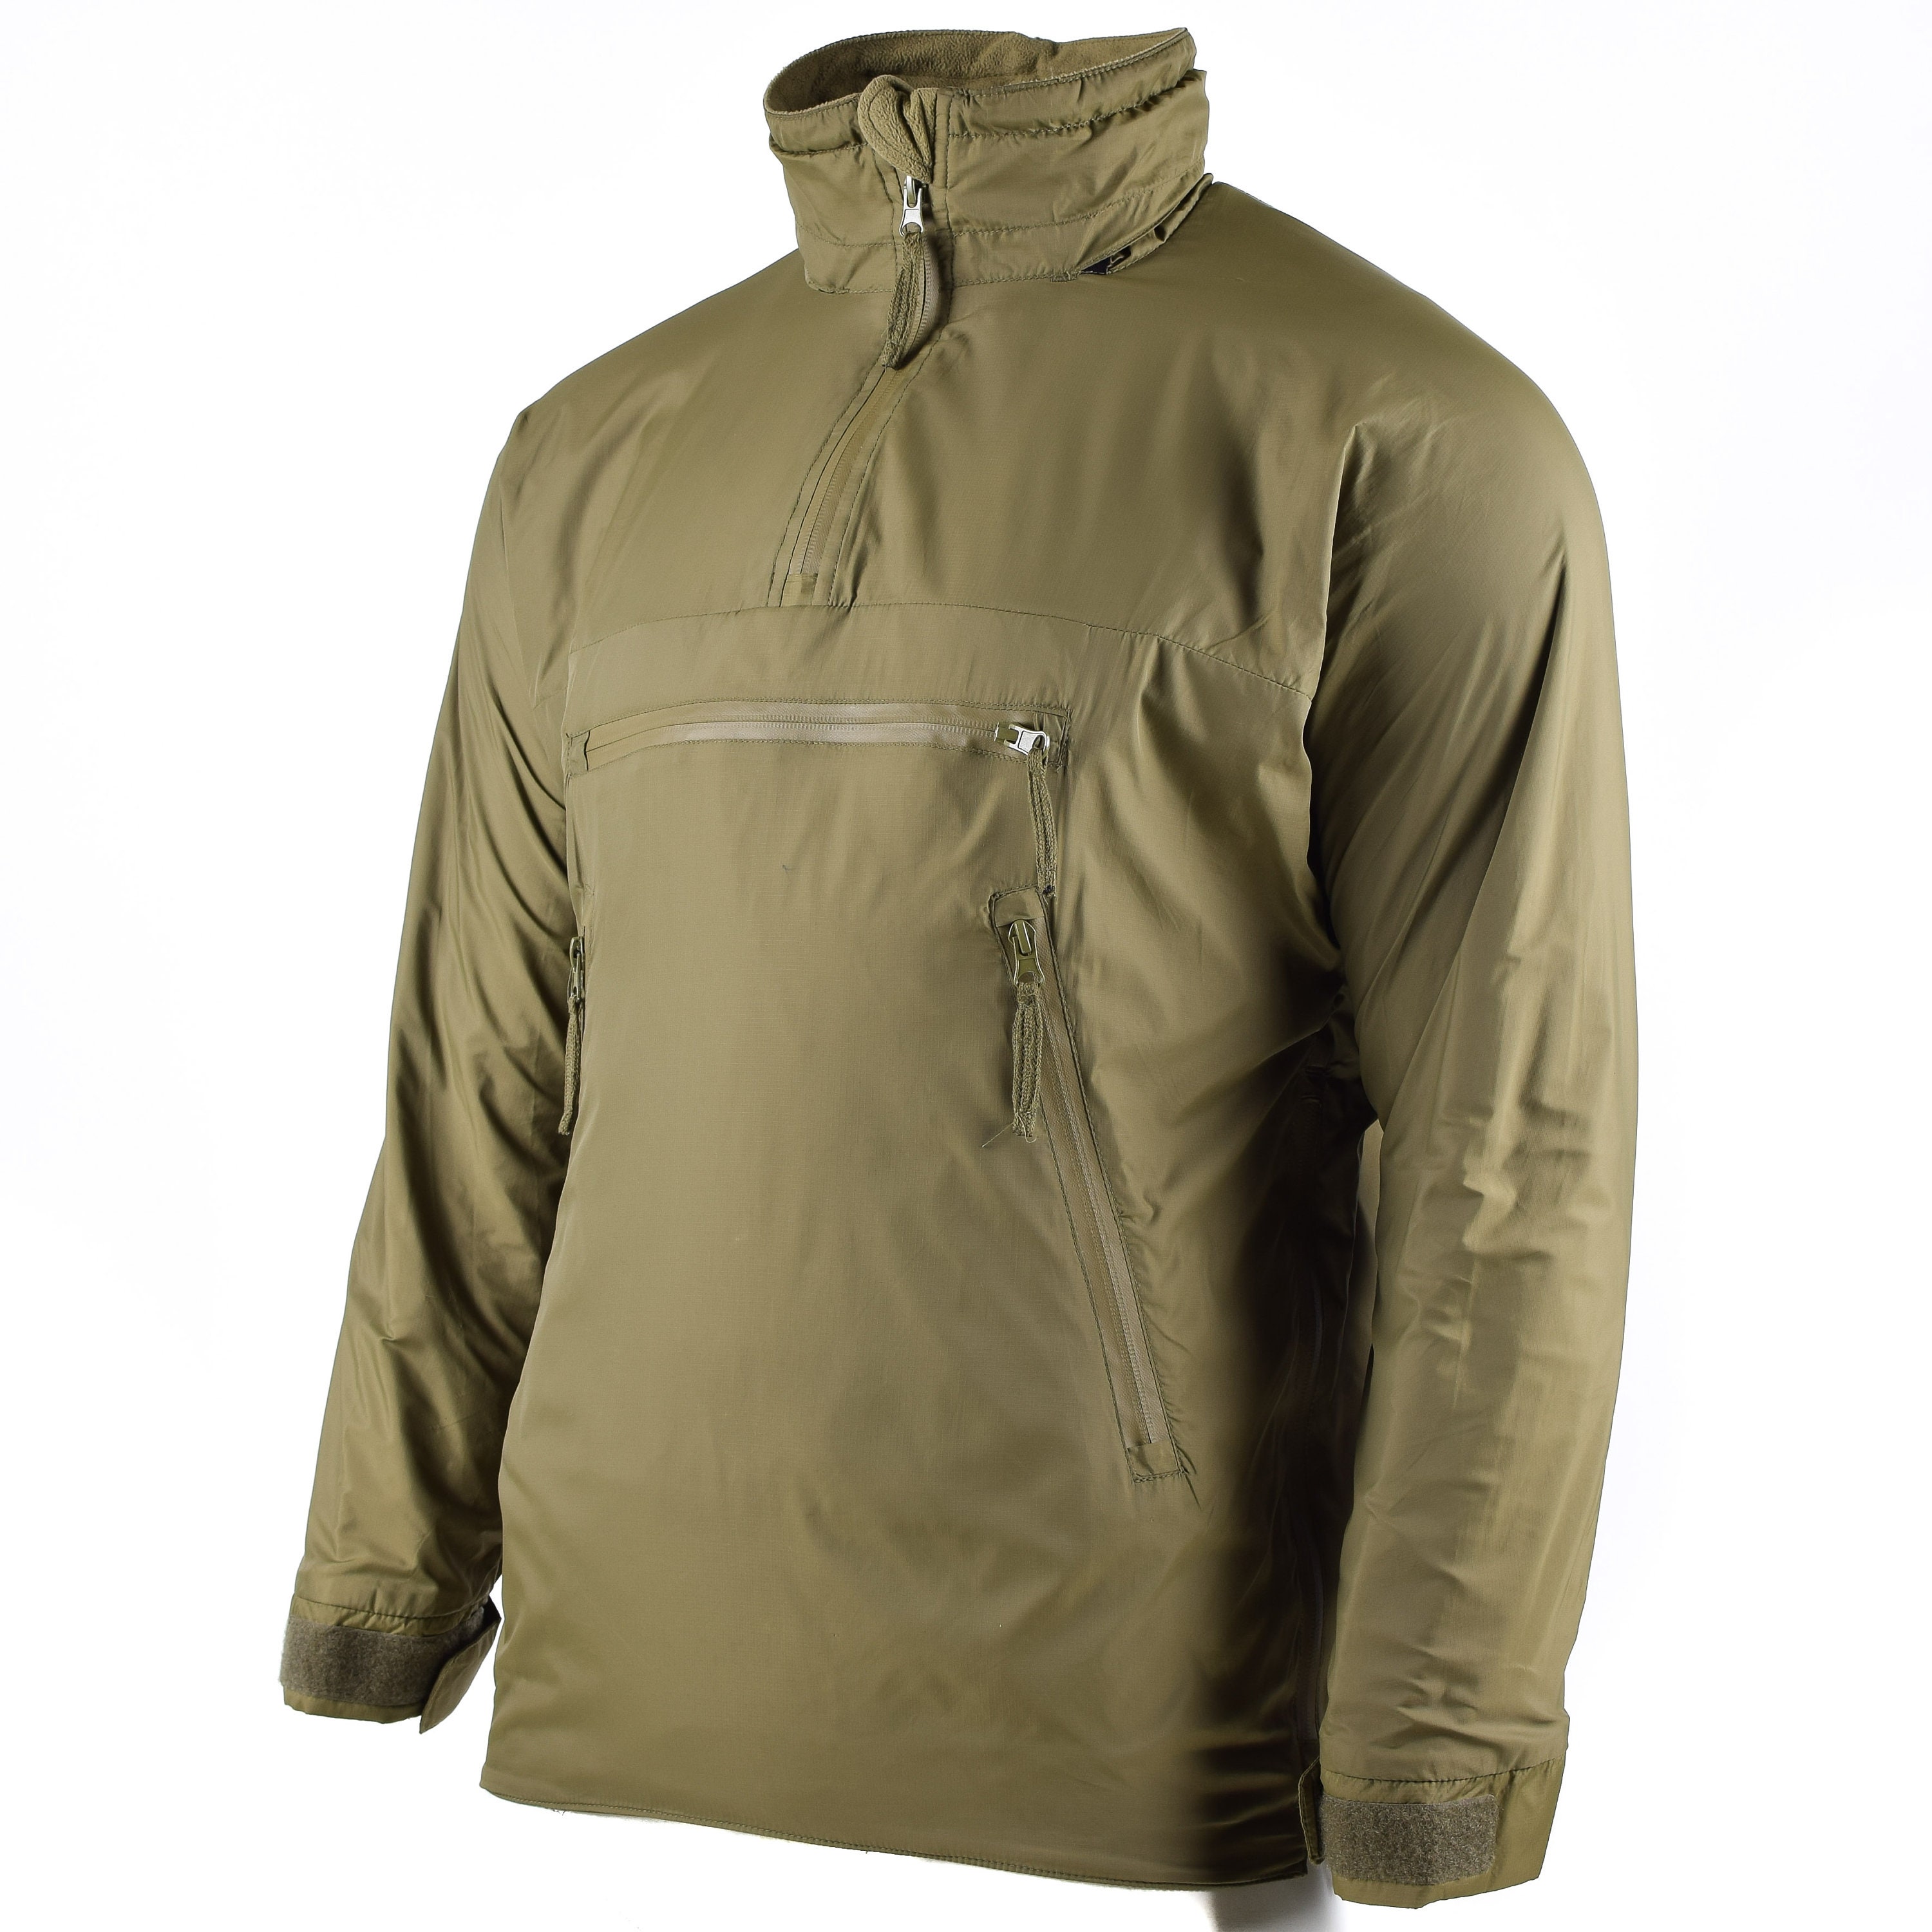 Genuine British Army Jacket Thermal Khaki Olive Lightweight - Etsy